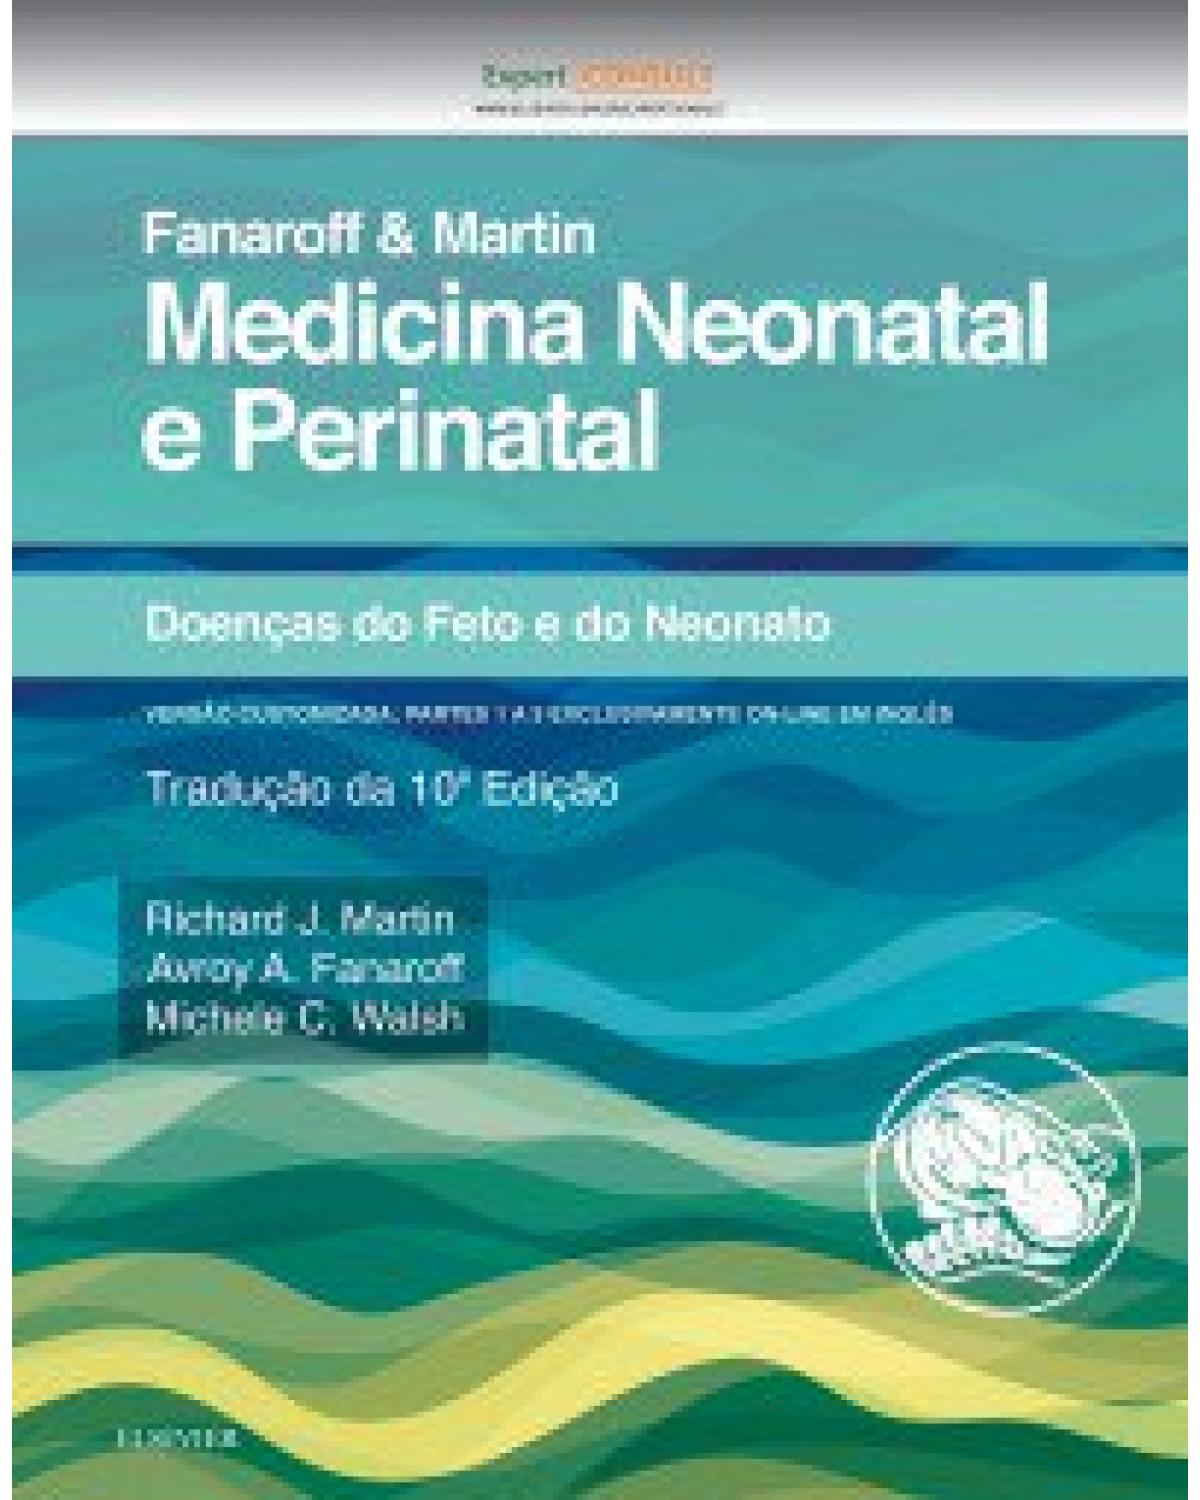 Fanaroff & Martin - Medicina neonatal e perinatal - 10ª Edição | 2017